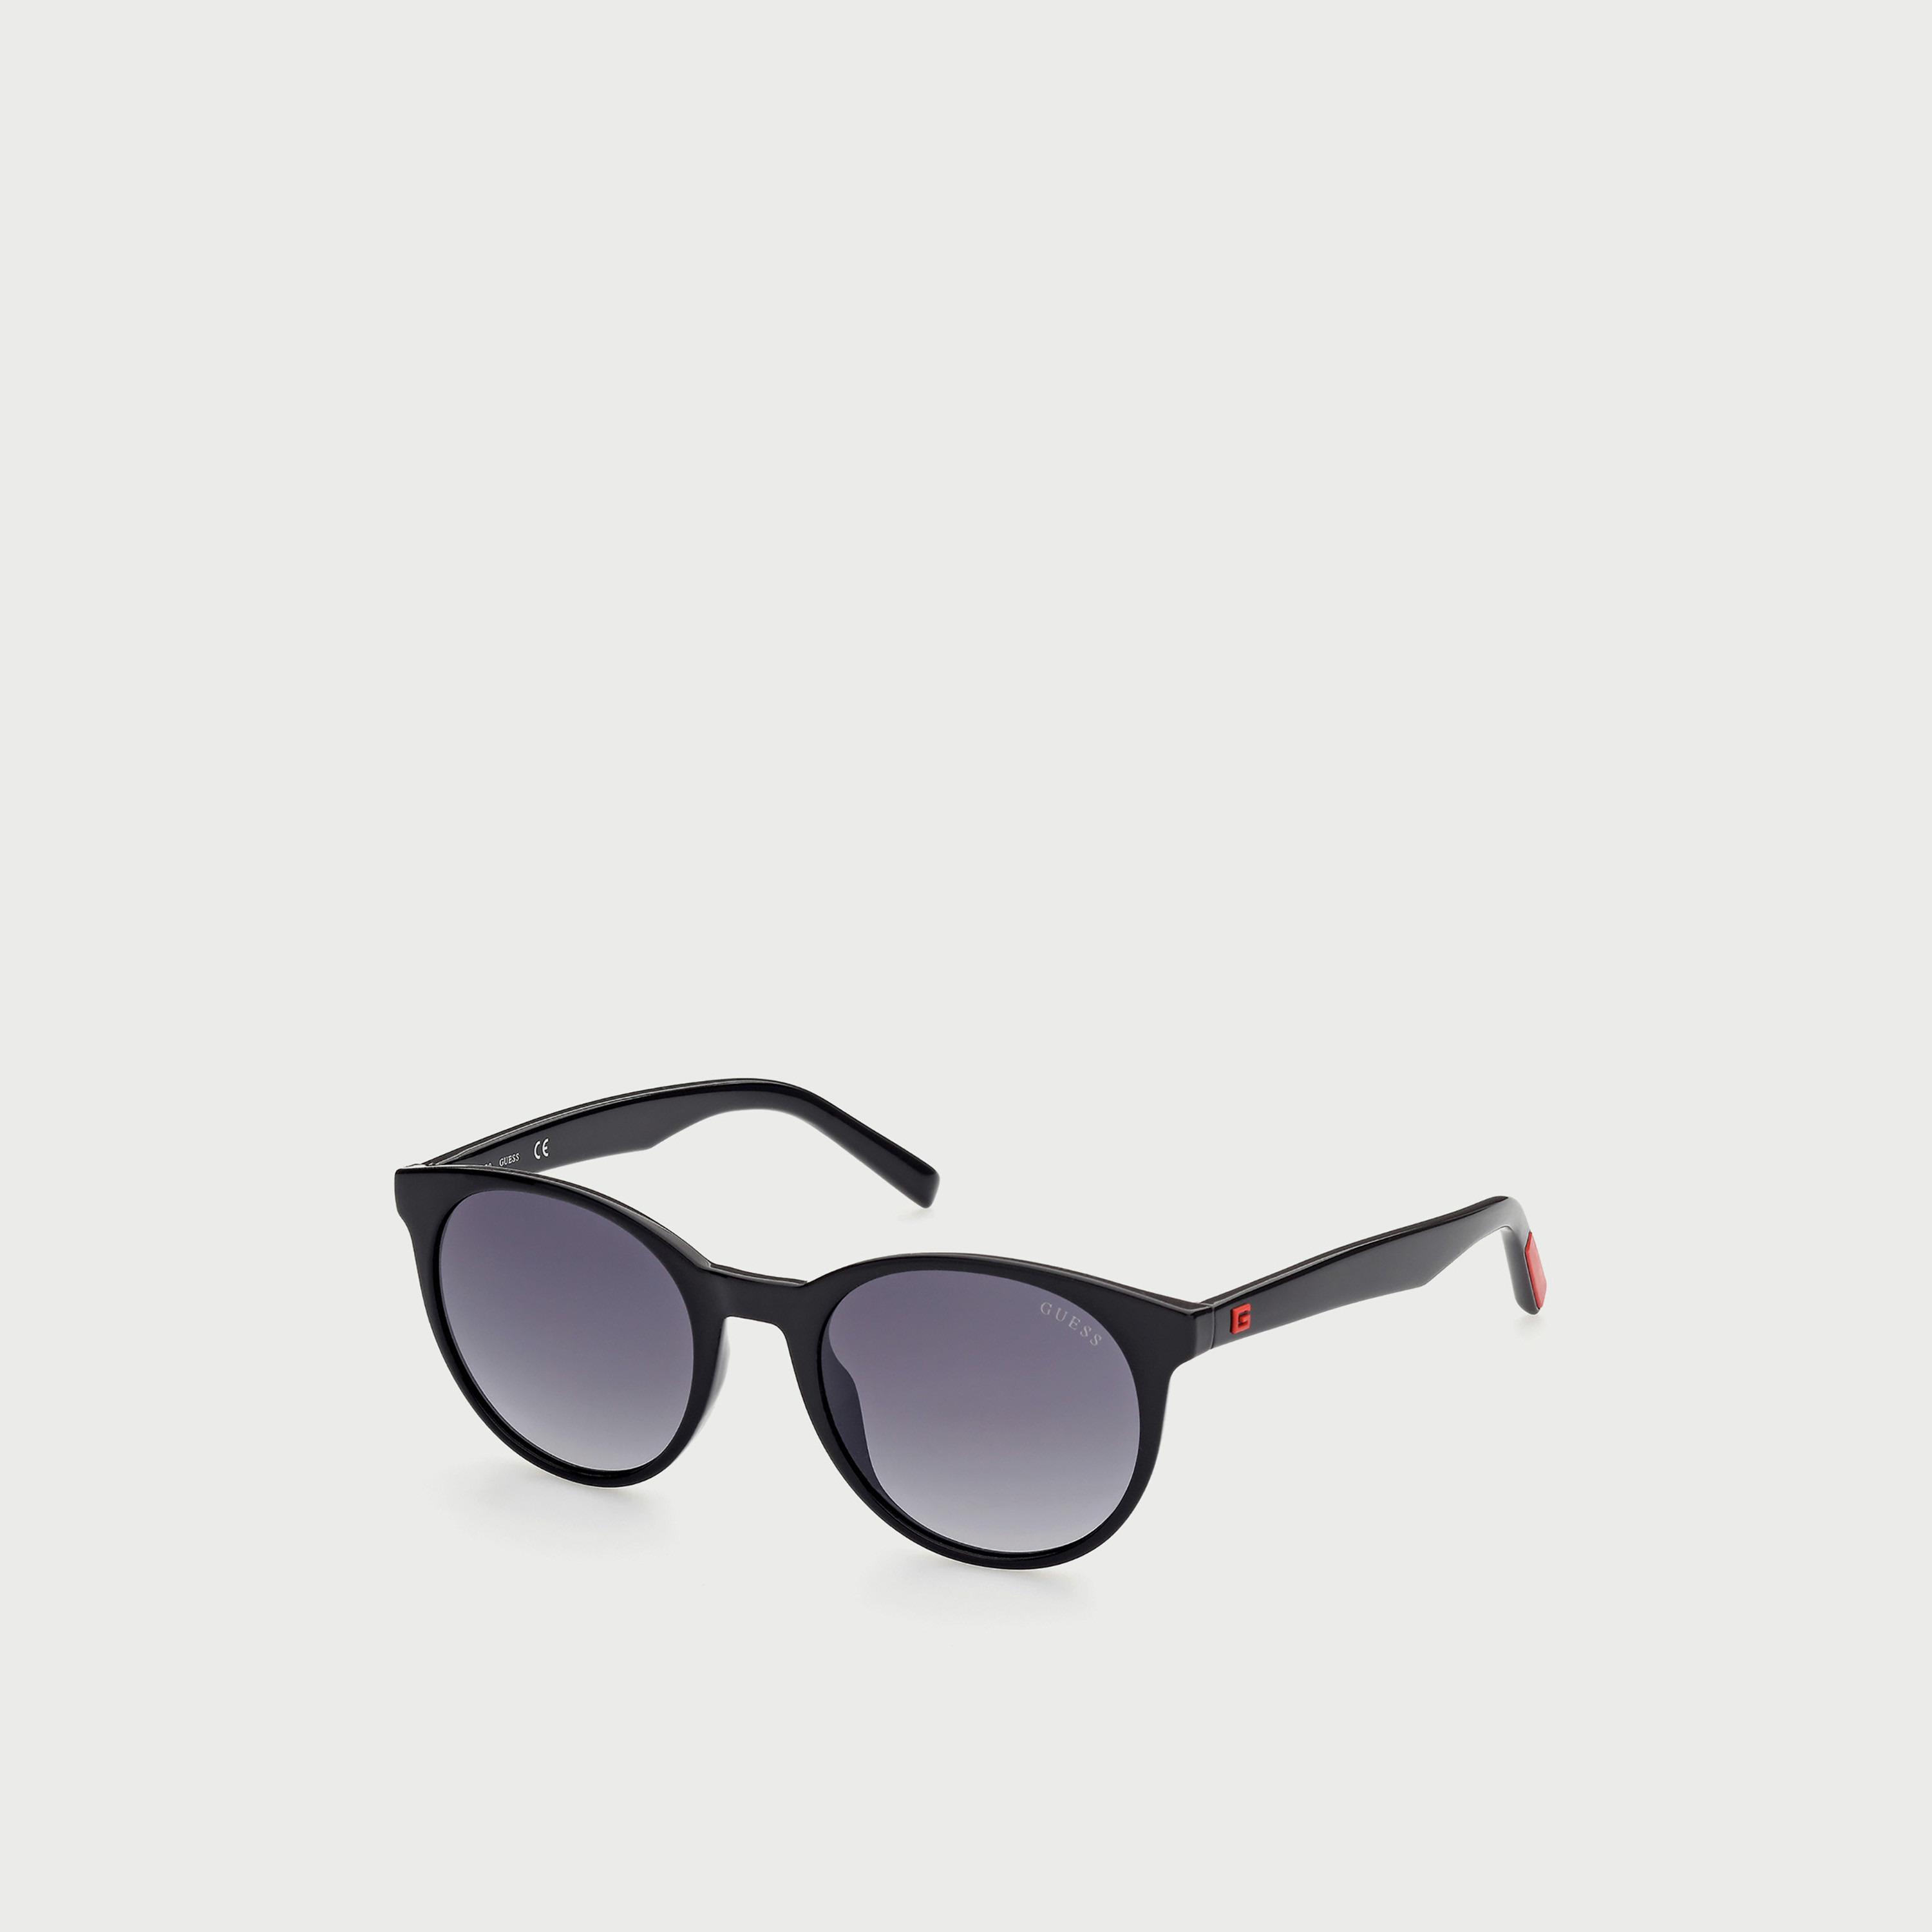 Buy Guess Sunglasses Online | SmartOptics